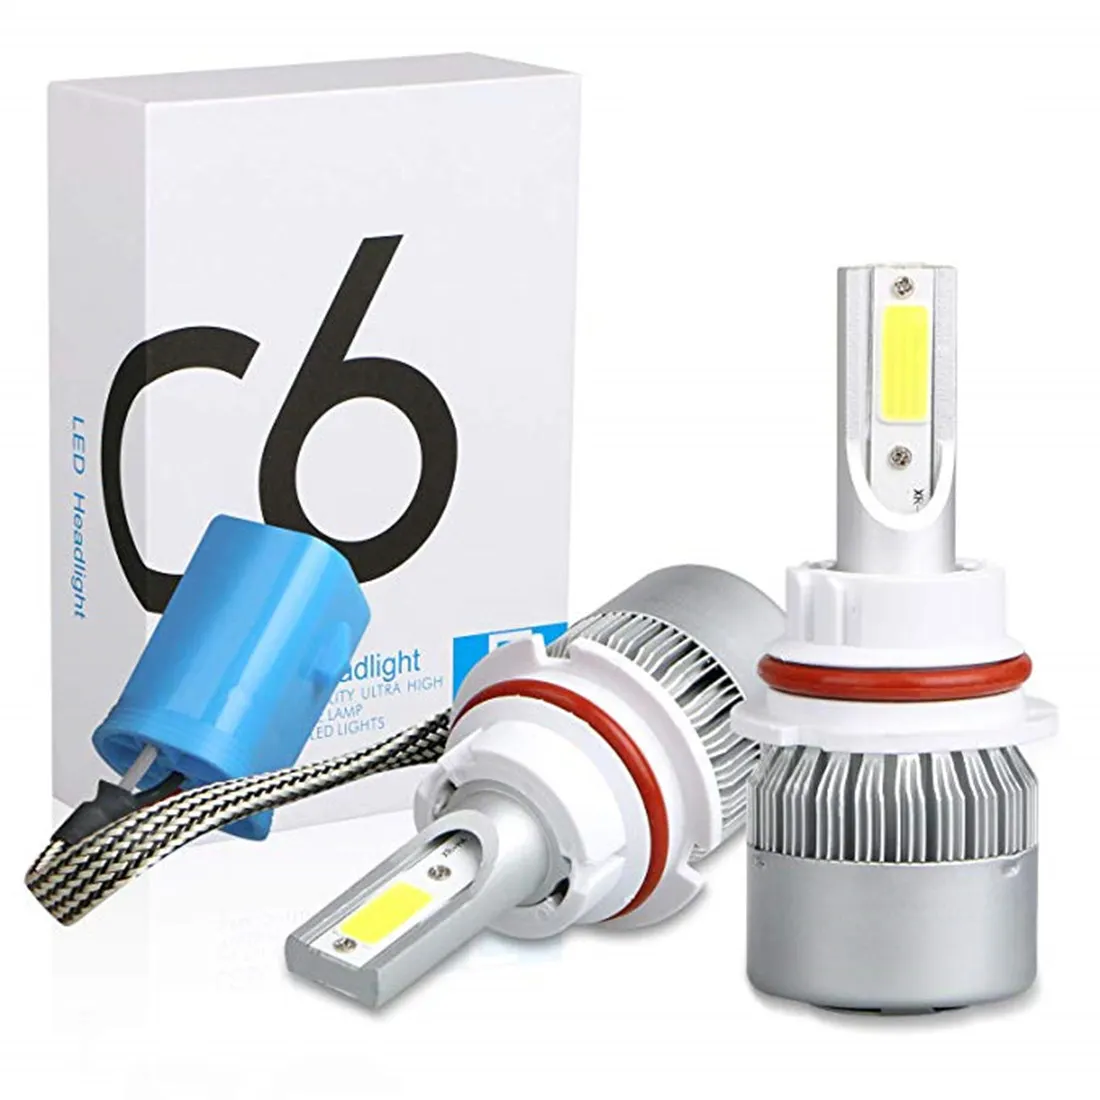 Cheap Price 12V White C6 Led Headlight Bulb 36W 3800Lm COB H1 H7 H11 H3 9005 9006 H4 6500K Car Led Headlight Headlamp Bulbs